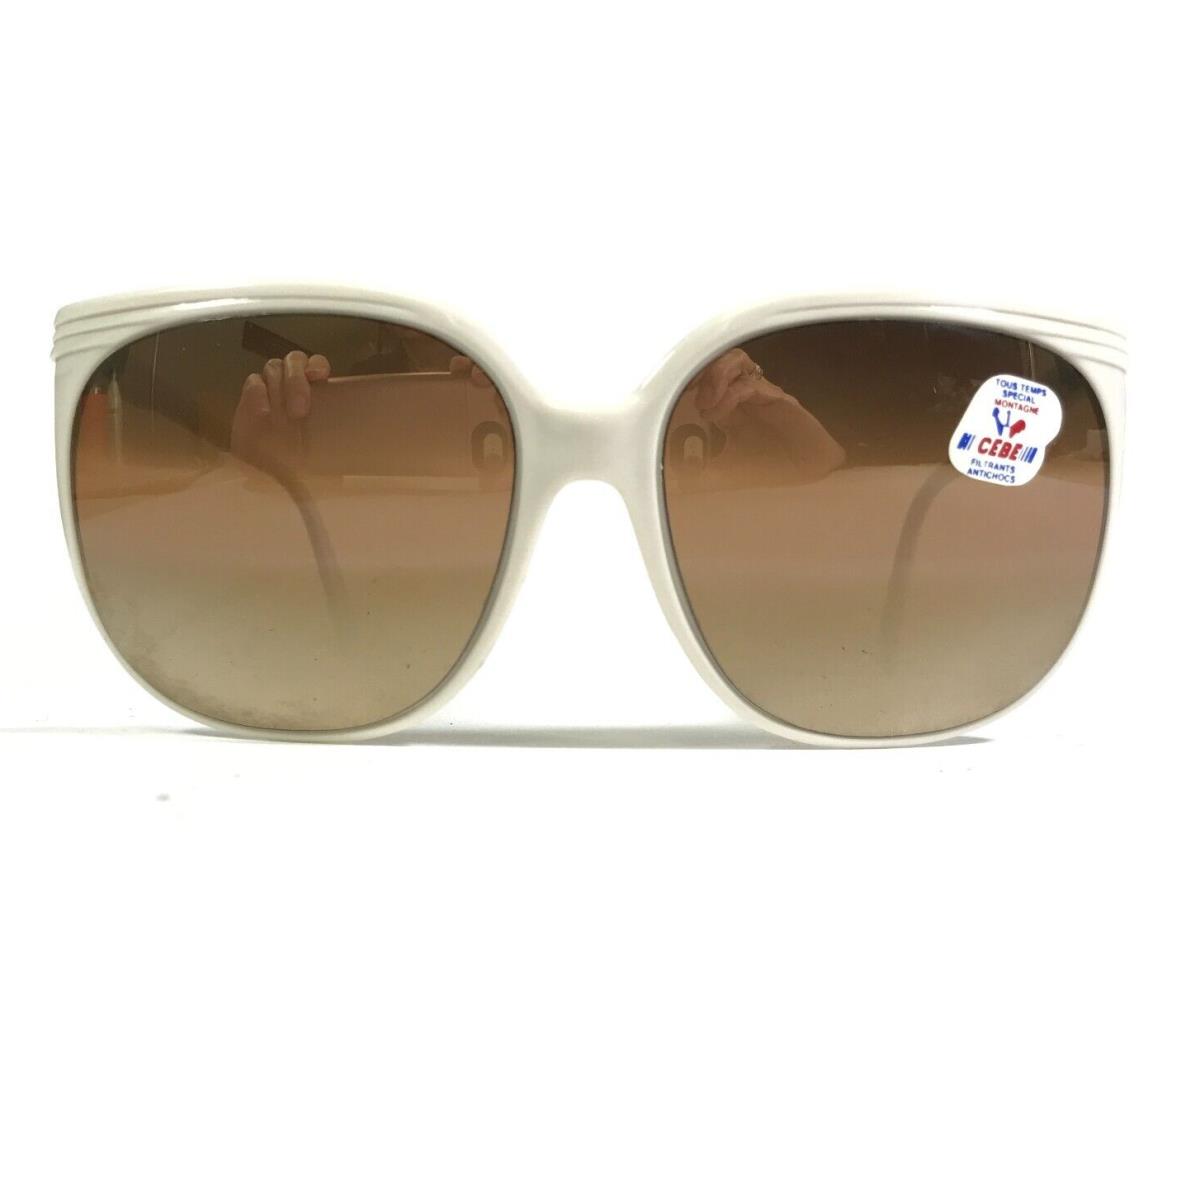 Vintage Cebe Sunglasses White Square Frames with Brown Lenses 57-15-120